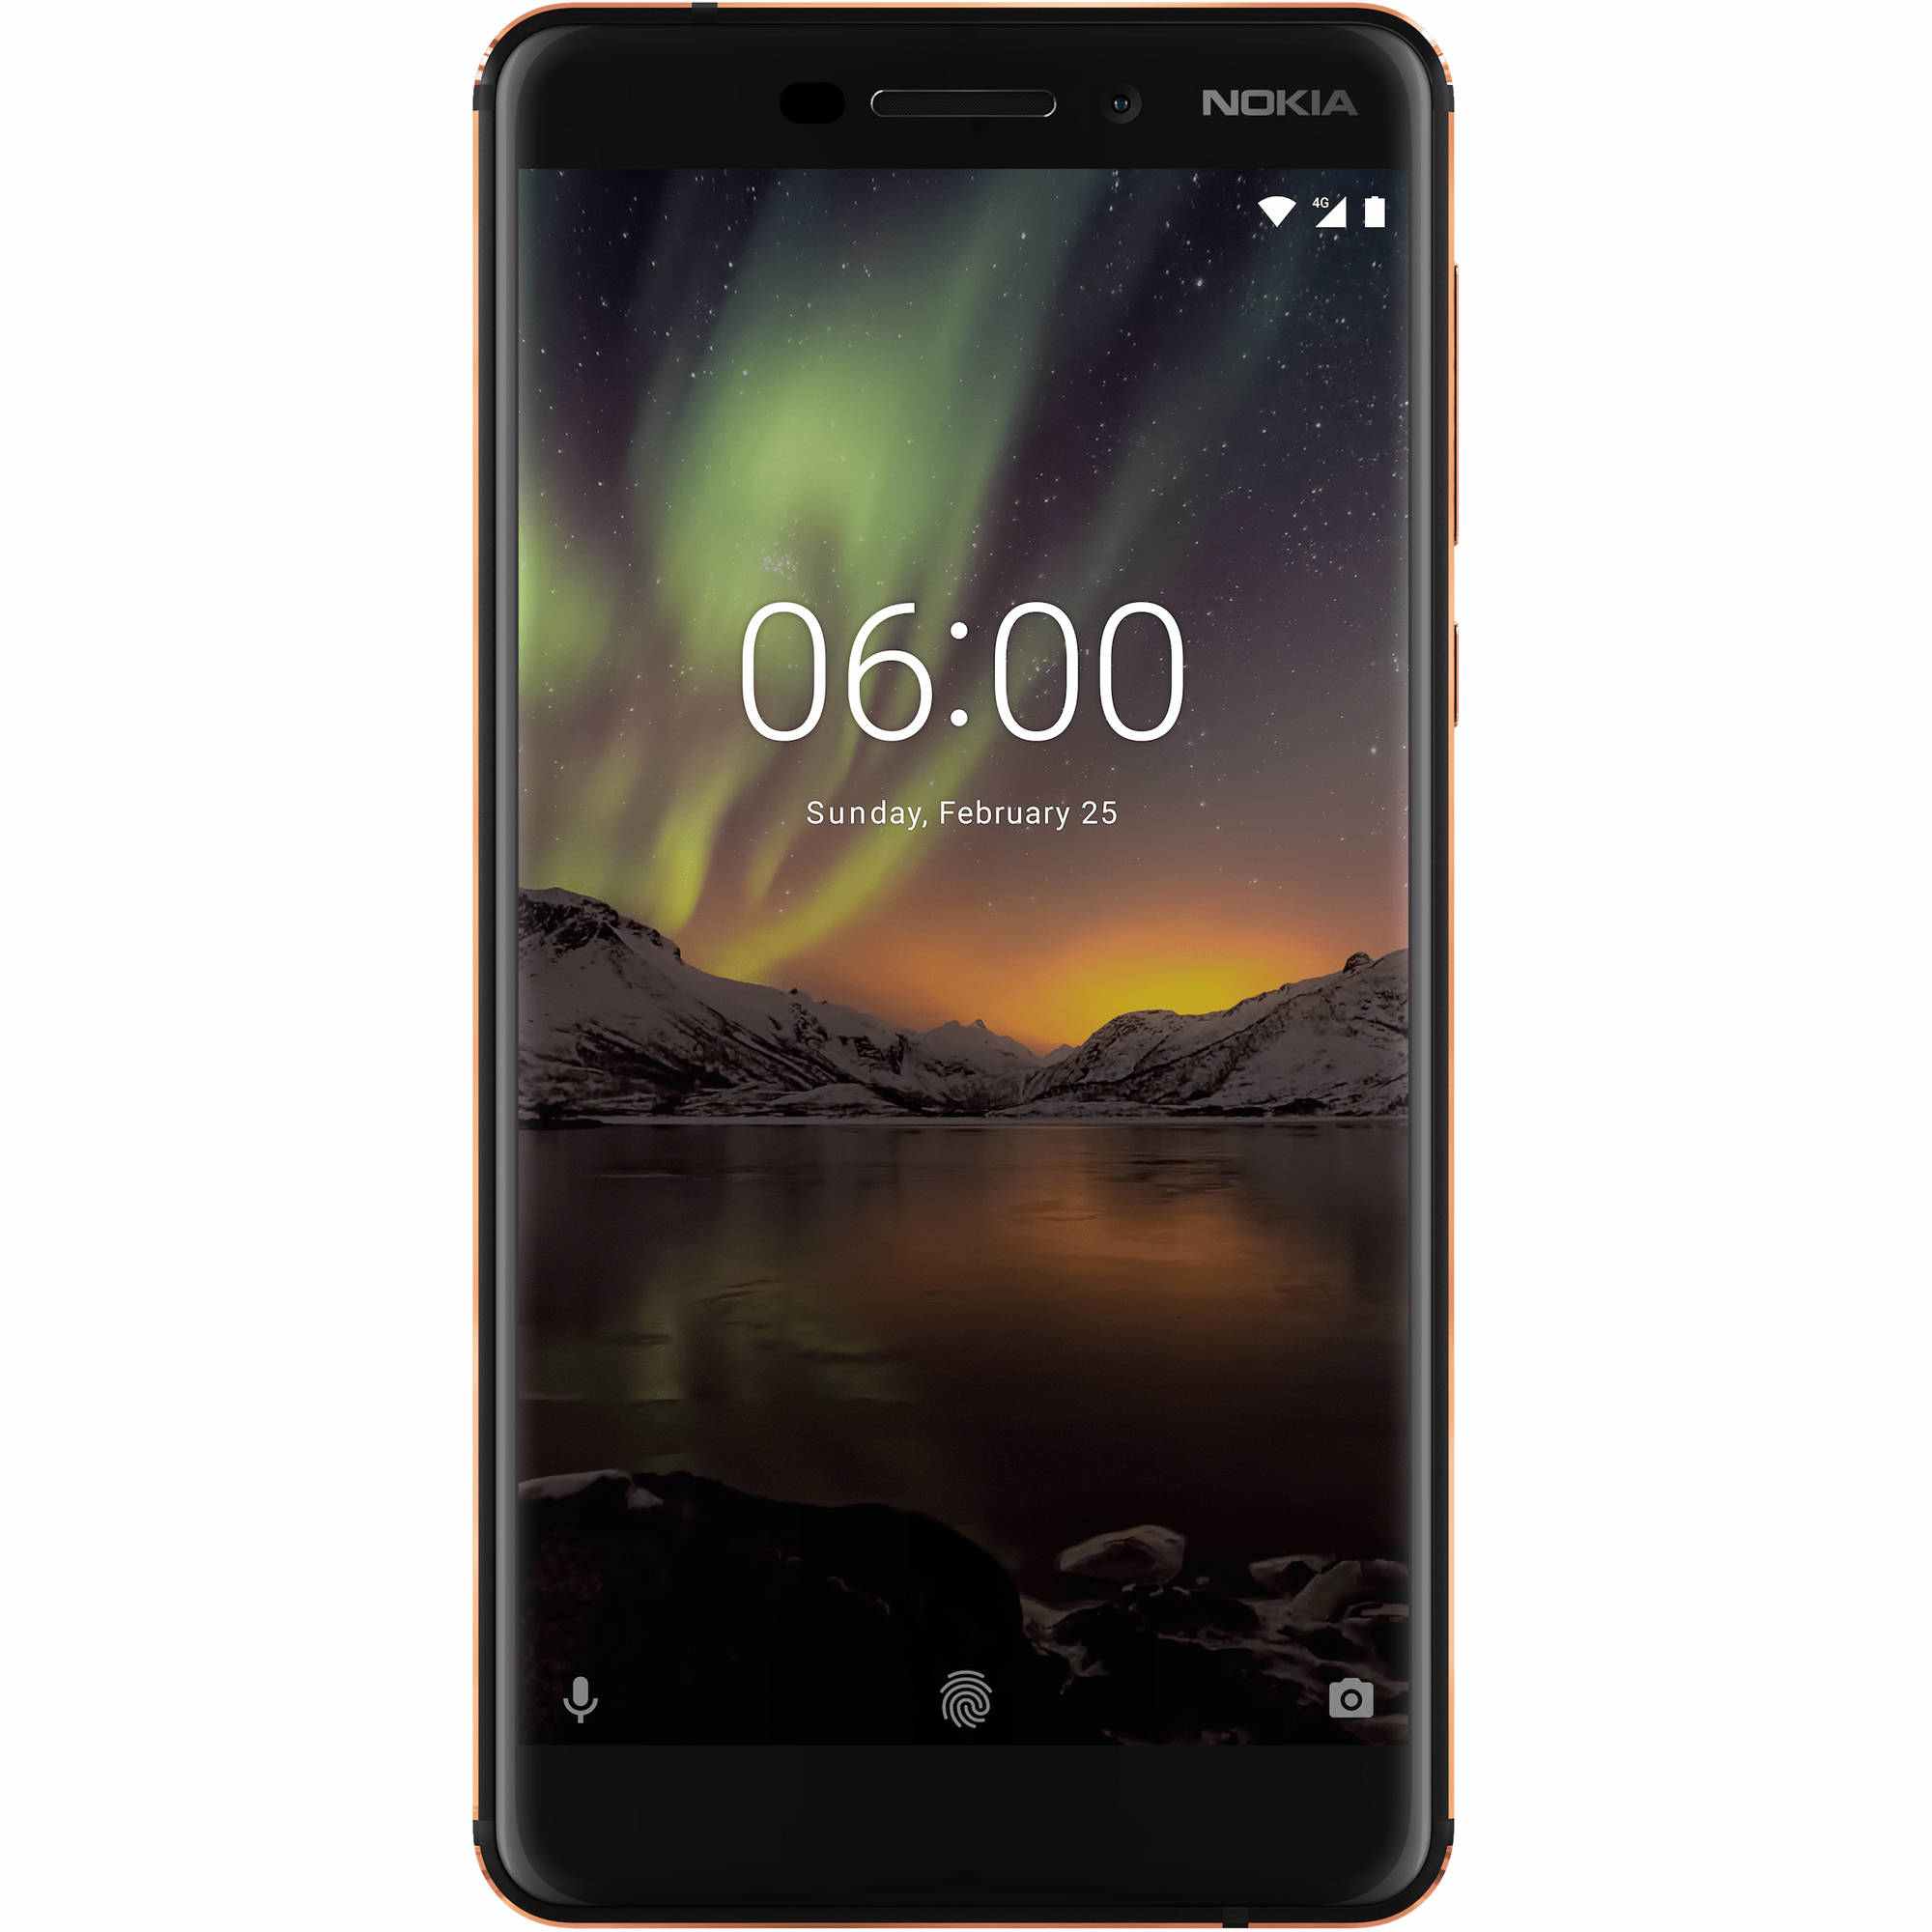 Nokia, Nokia 6.1, Nokia Smartphones, Finnish company, HMD Global, Android 9 Pie, Gadget news, Smartphone and mobile news